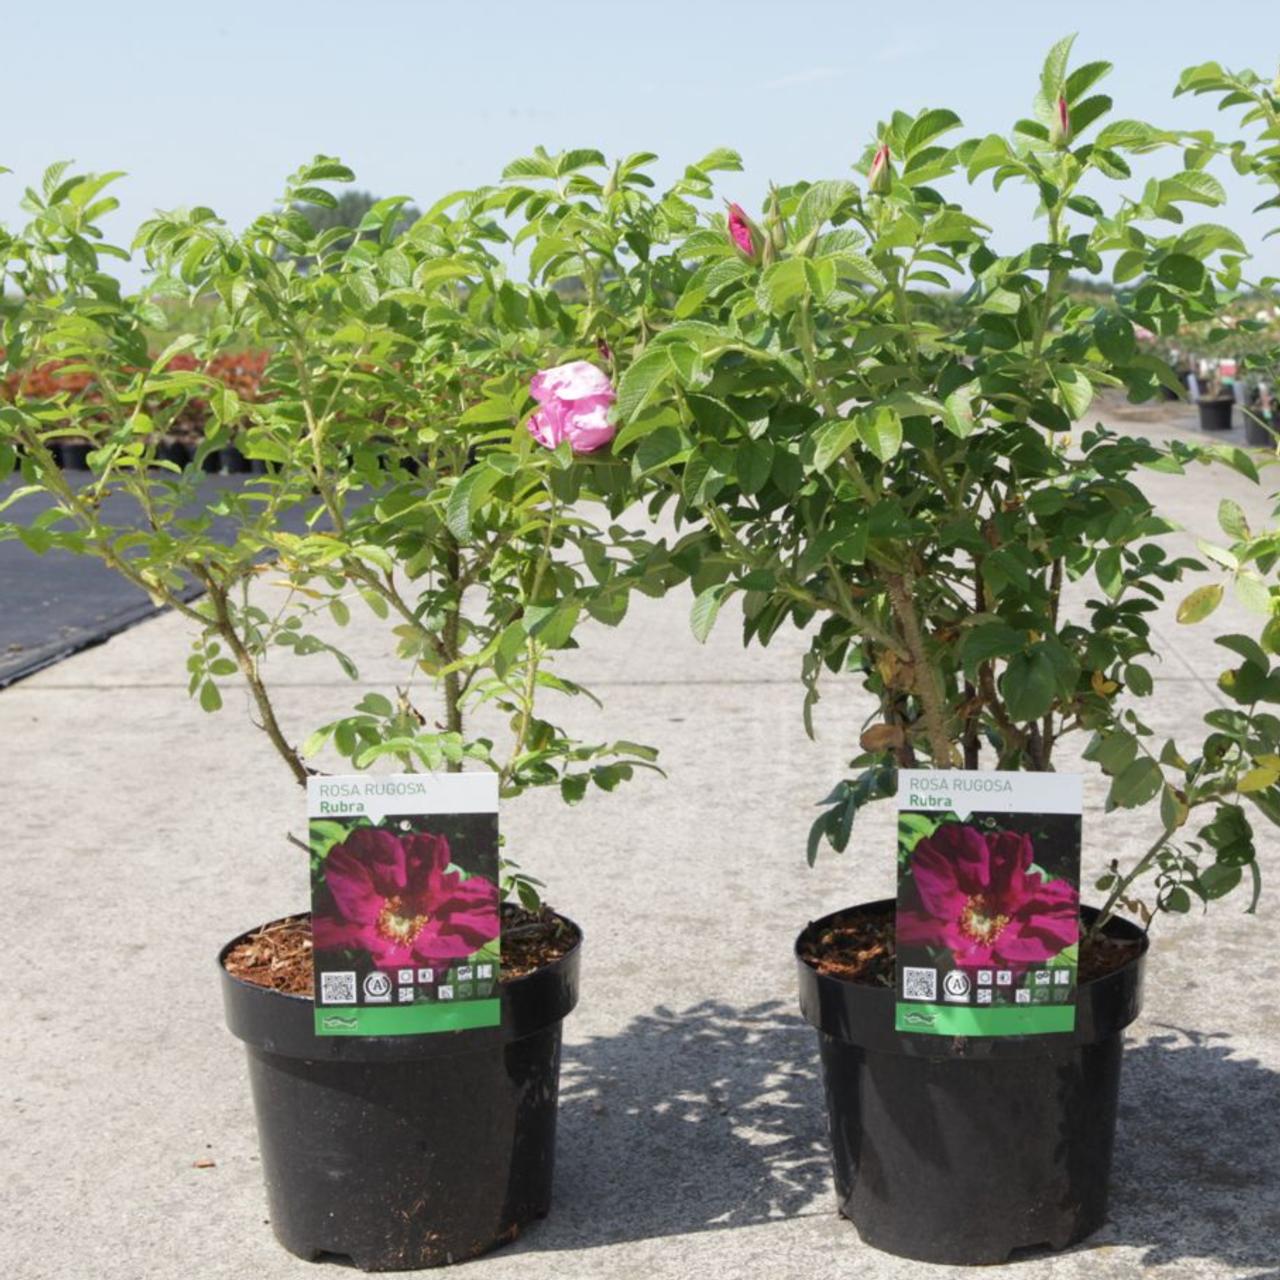 Rosa rugosa 'Rubra' plant